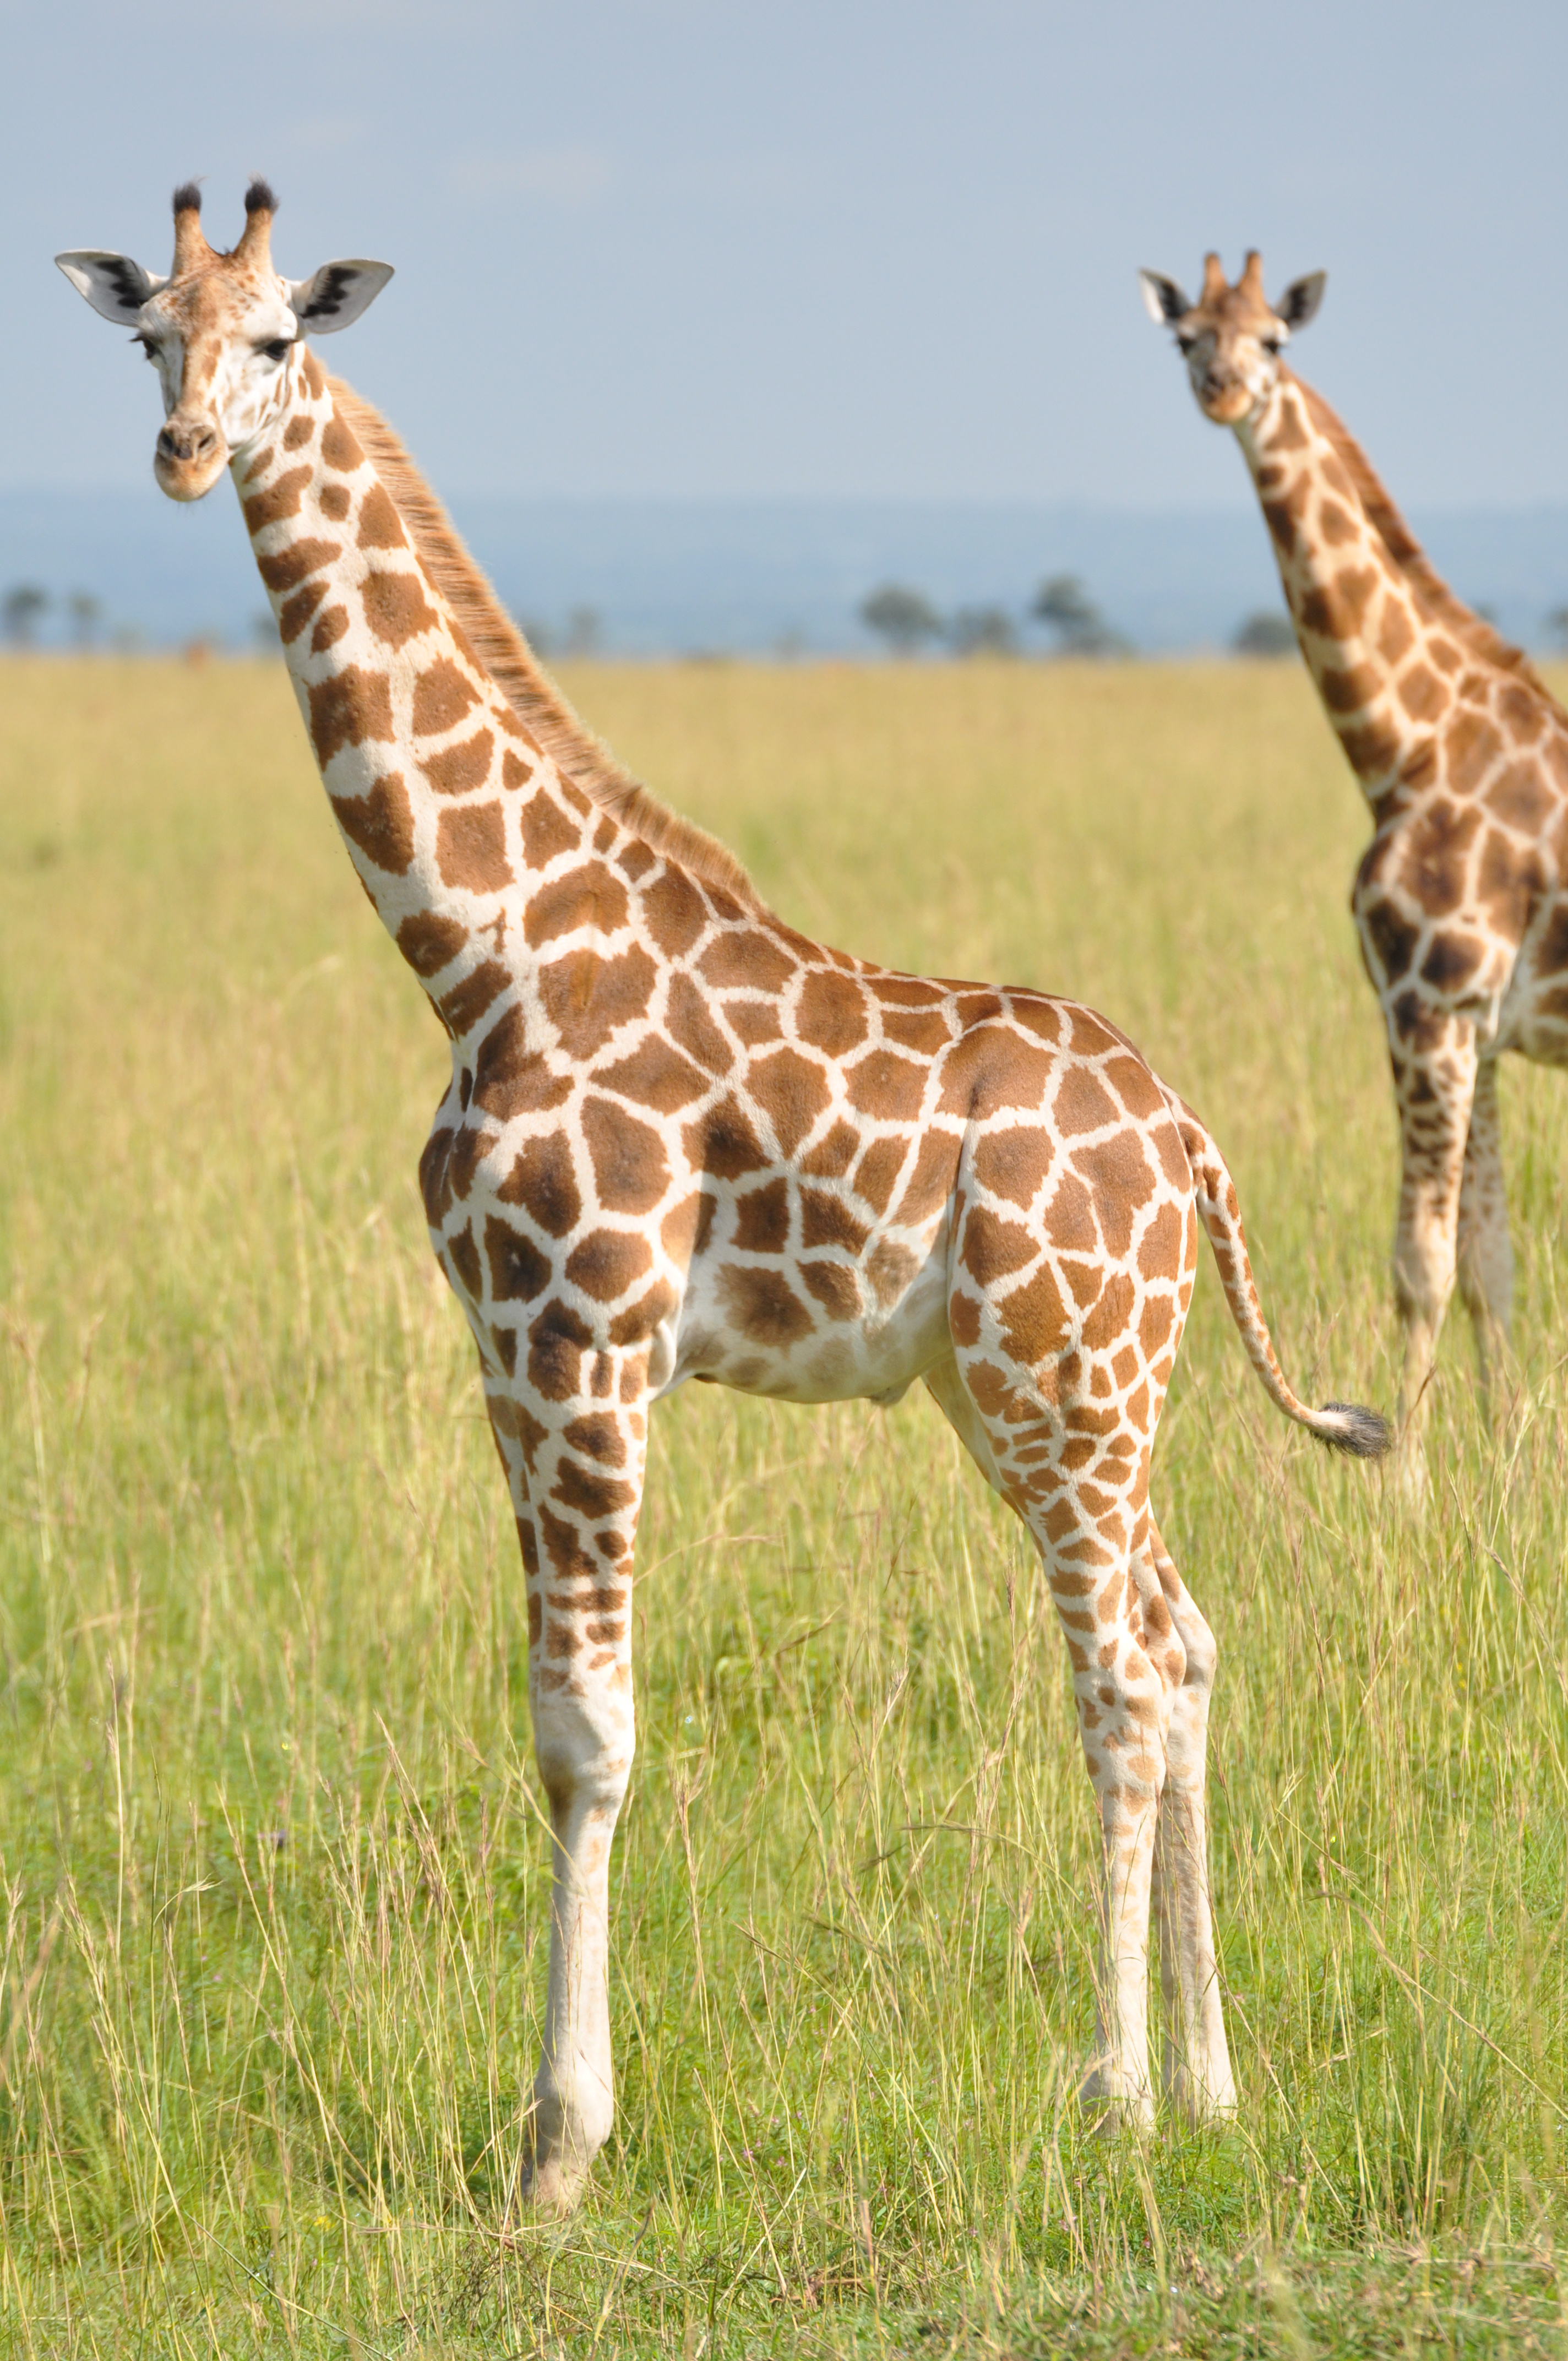 Giraffes Await the World's Protection